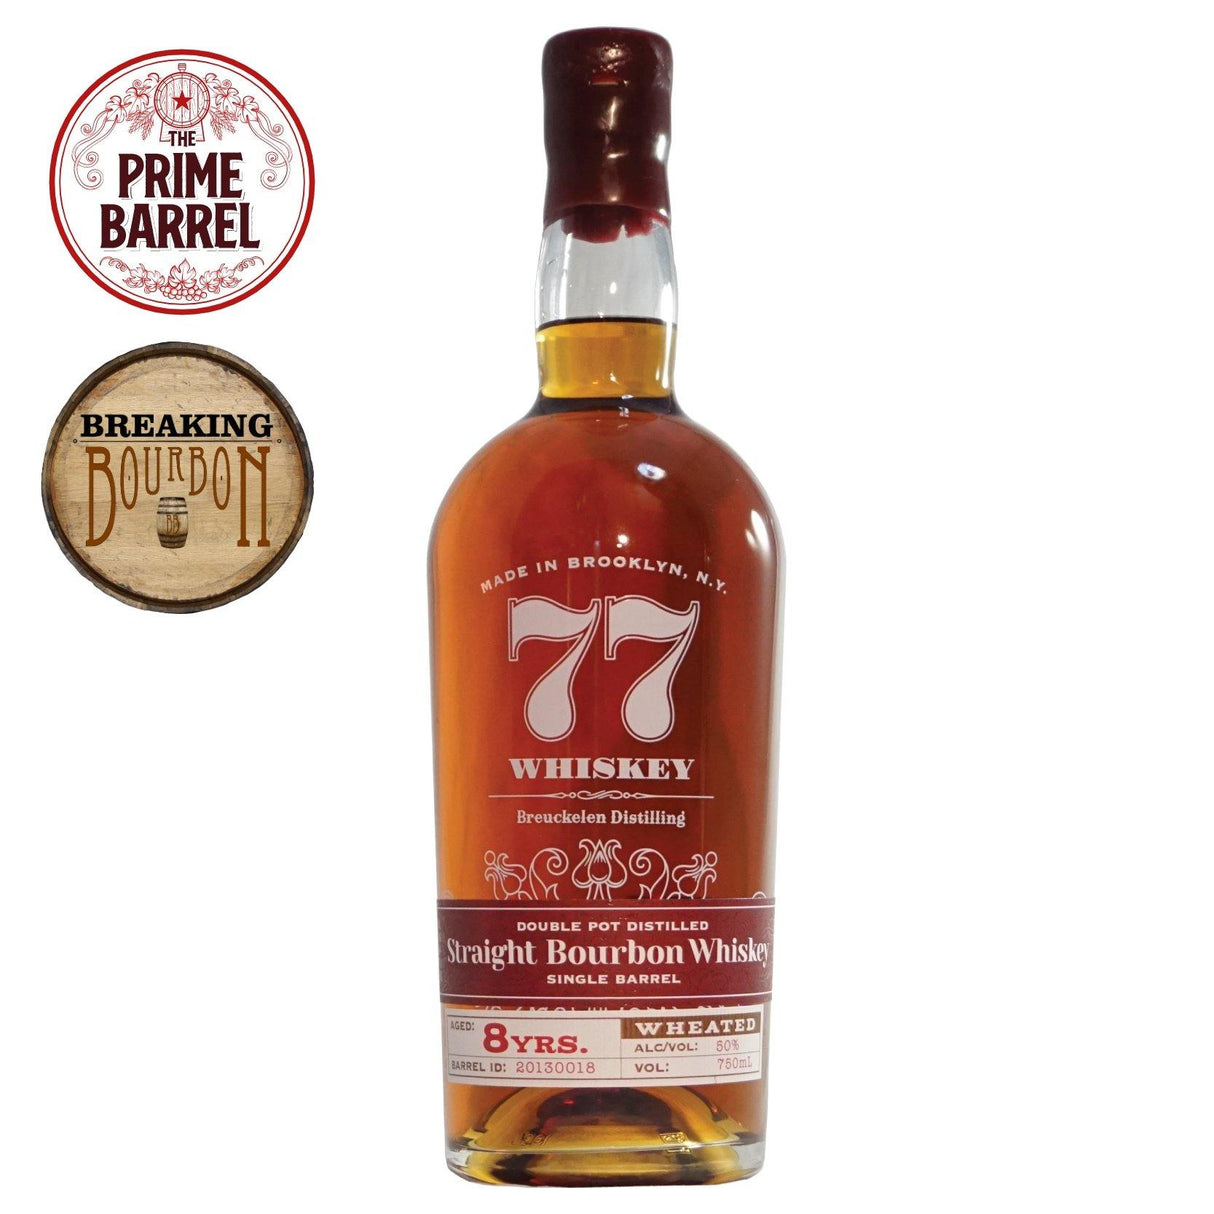 Breuckelen Distilling 77 Whiskey "The Borough of Breuckelen" 8 Year Collaboration Single Barrel Wheated Straight Bourbon Whiskey - De Wine Spot | DWS - Drams/Whiskey, Wines, Sake